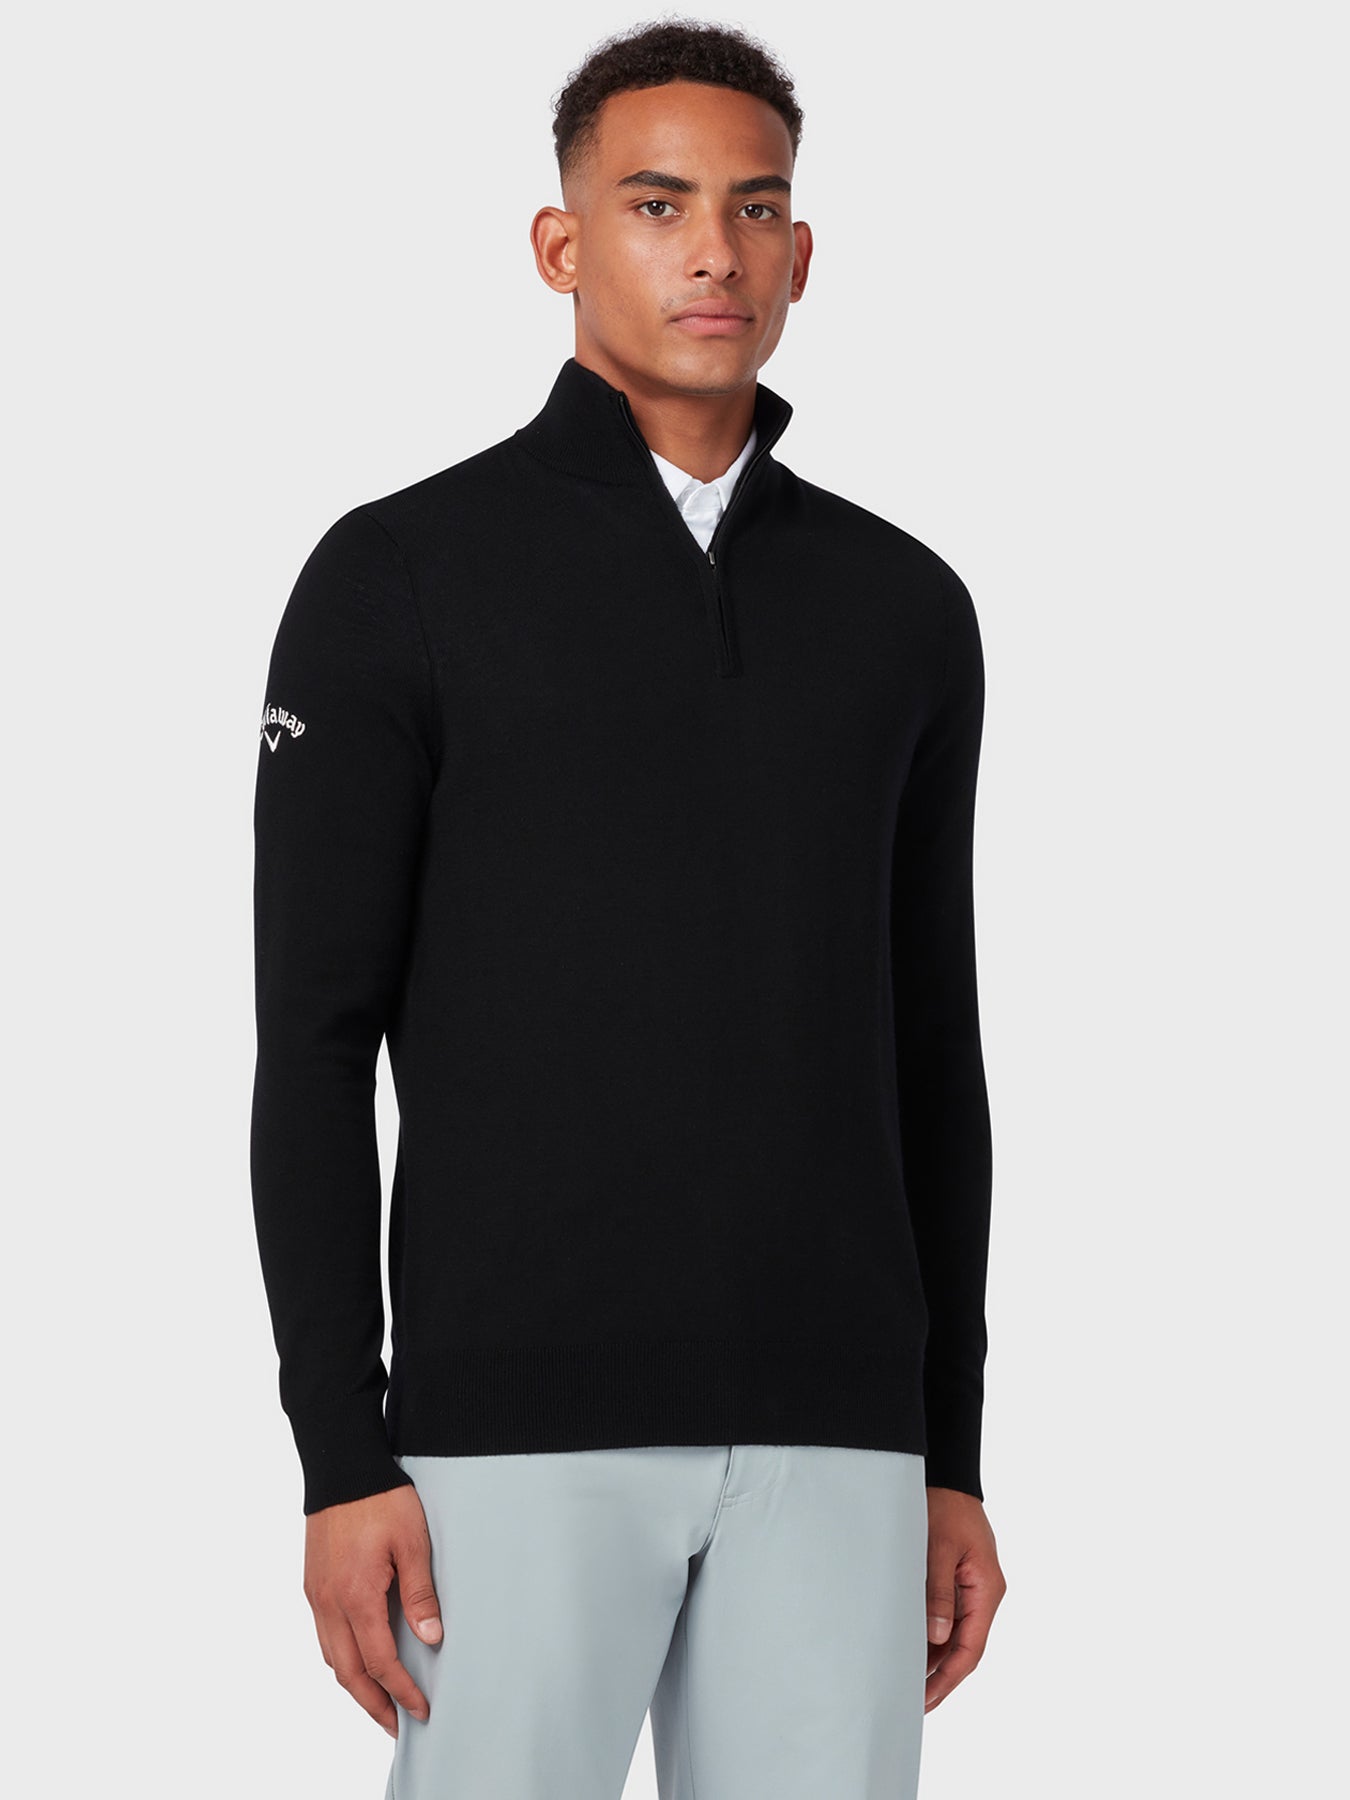 View Thermal Merino Wool Quarter Zip Sweater In Black Onyx Black Onyx XL information